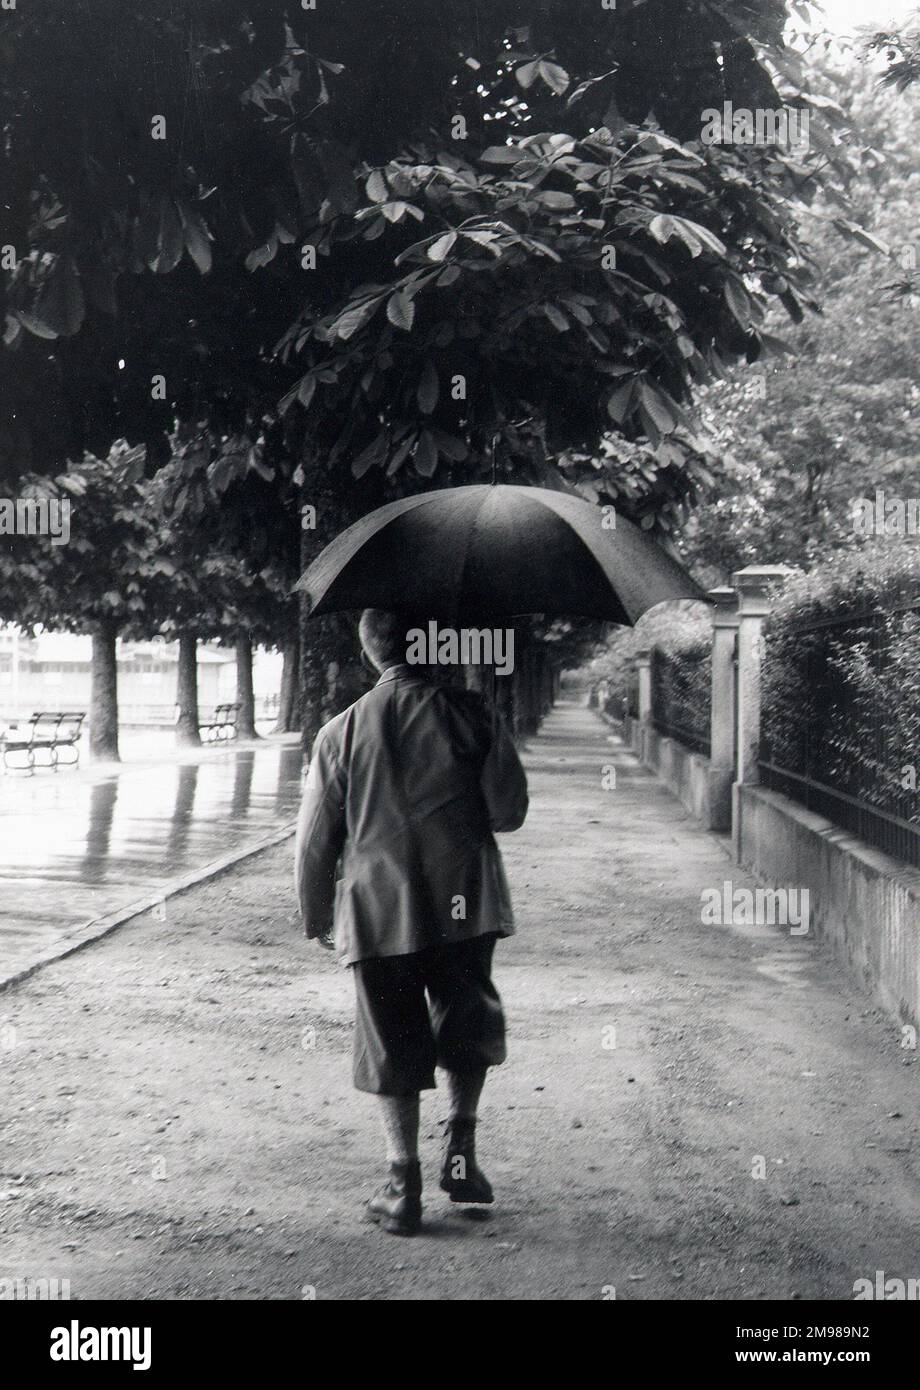 Man walking in the rain holding an umbrella wearing plus fours, Lucerne, Switzerland. Stock Photo